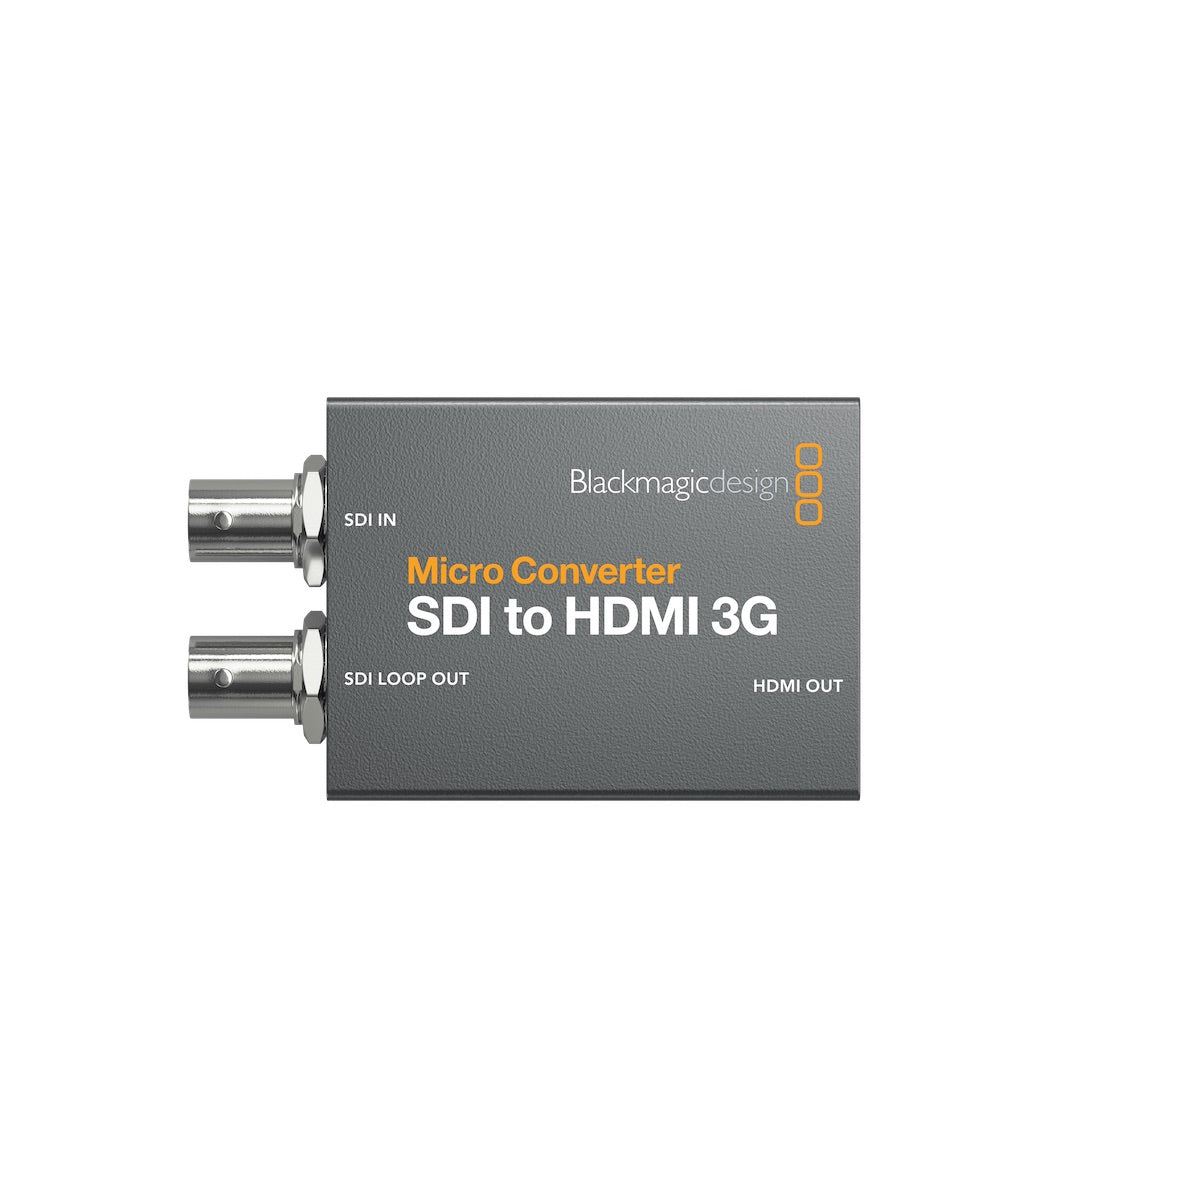 Blackmagic Micro Converter - SDI to HDMI 3G, front